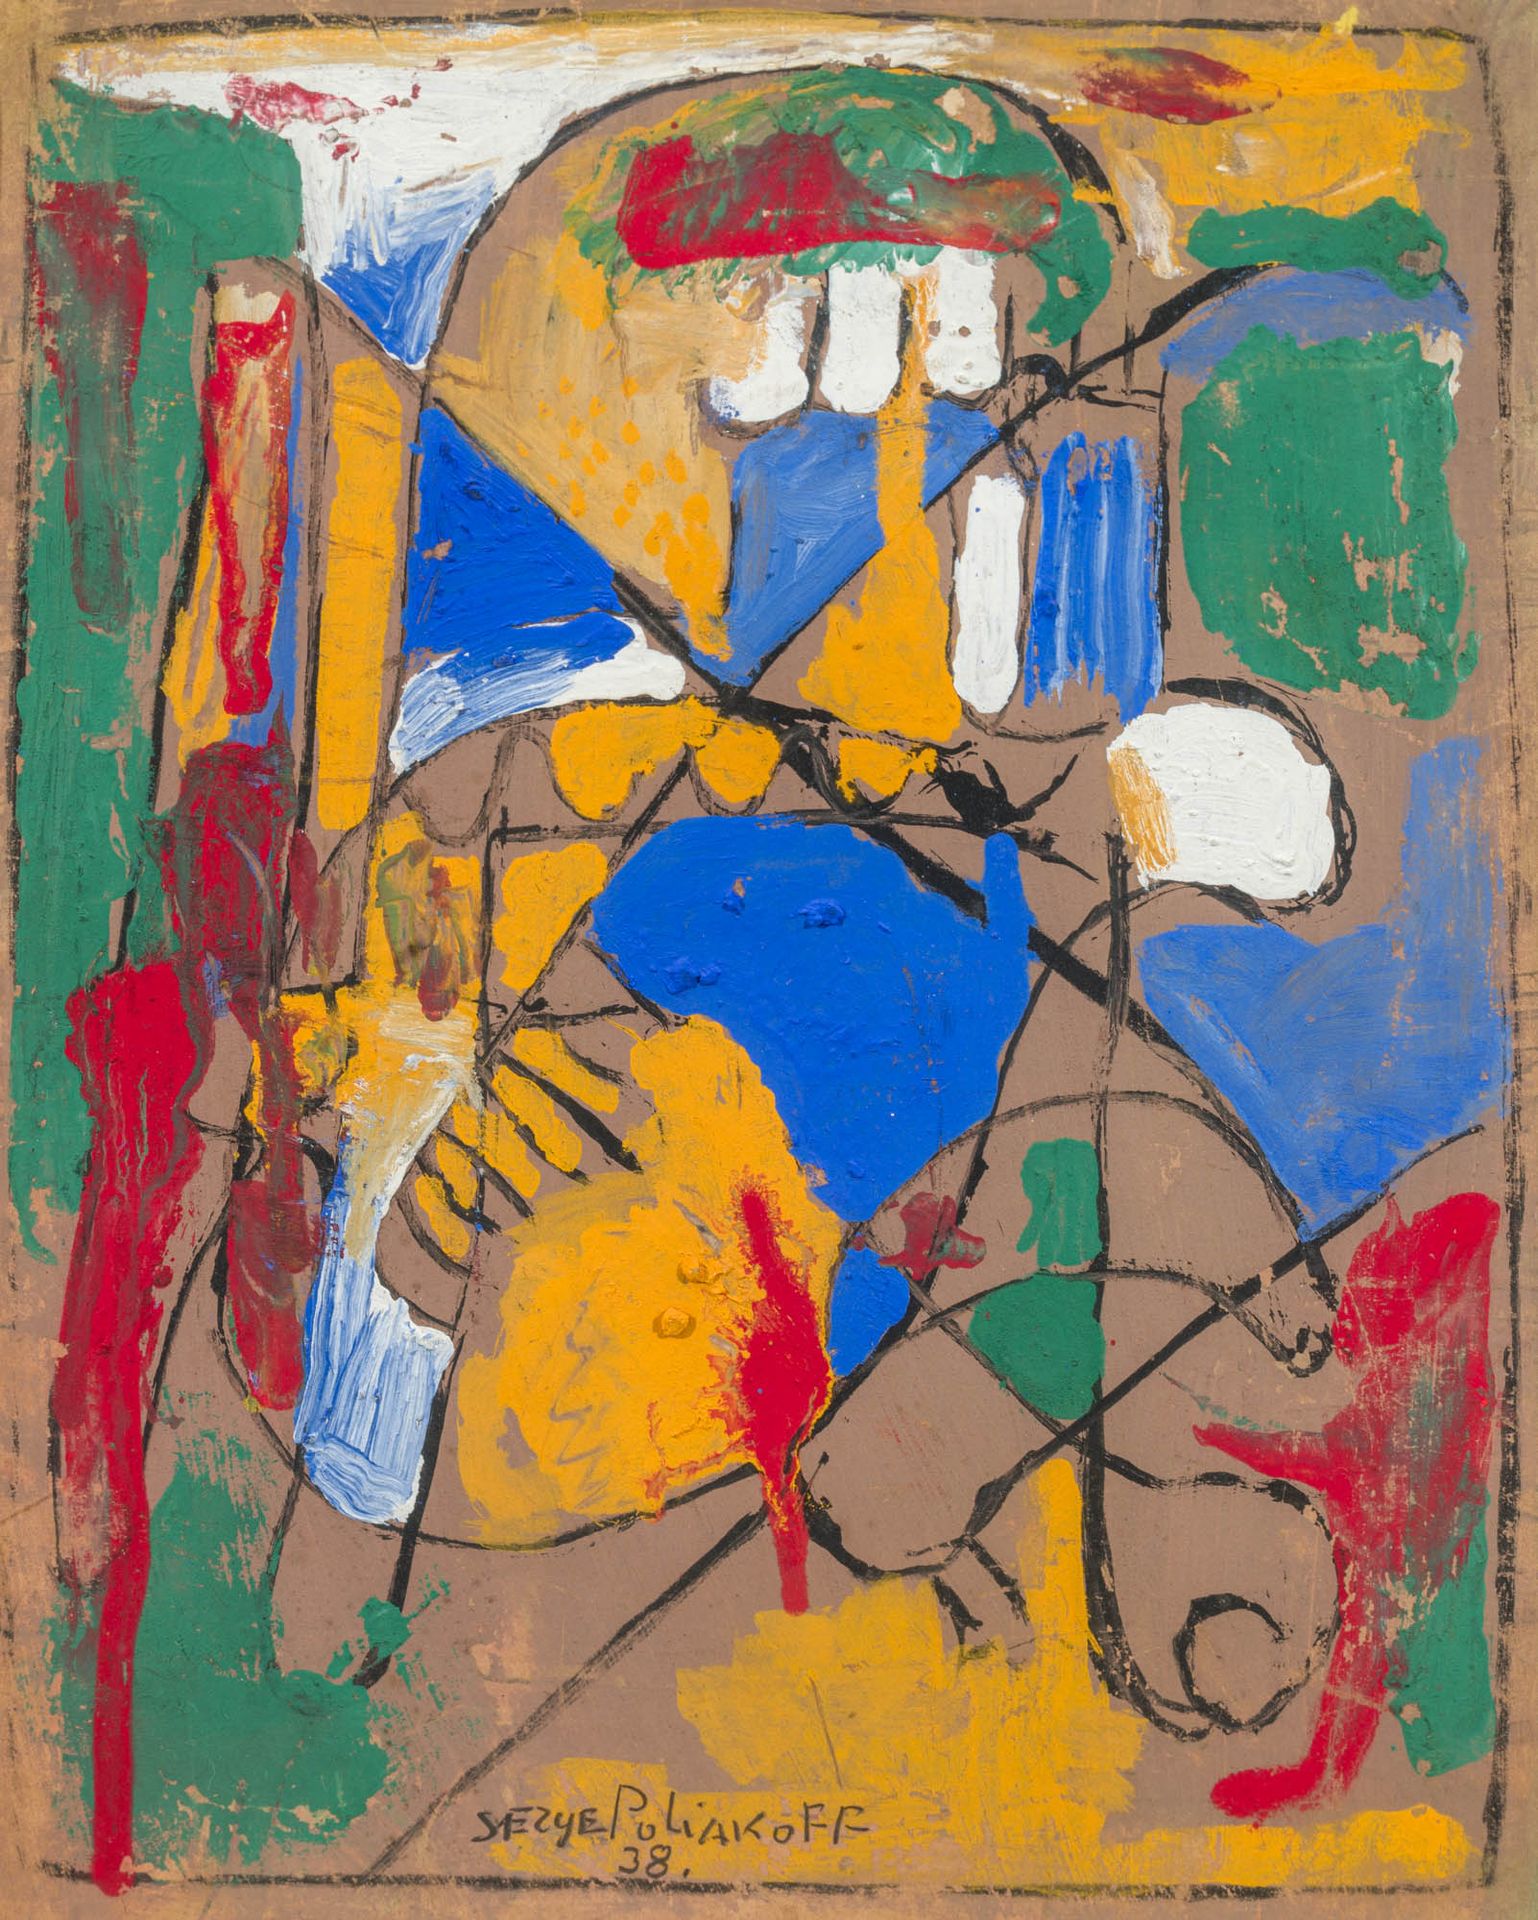 Serge Poliakoff 1900–1969 谢尔盖-波利亚科夫 1900-1969

构成特征，1938年

水粉画在纸板上

中央下方有签名和日期SE&hellip;